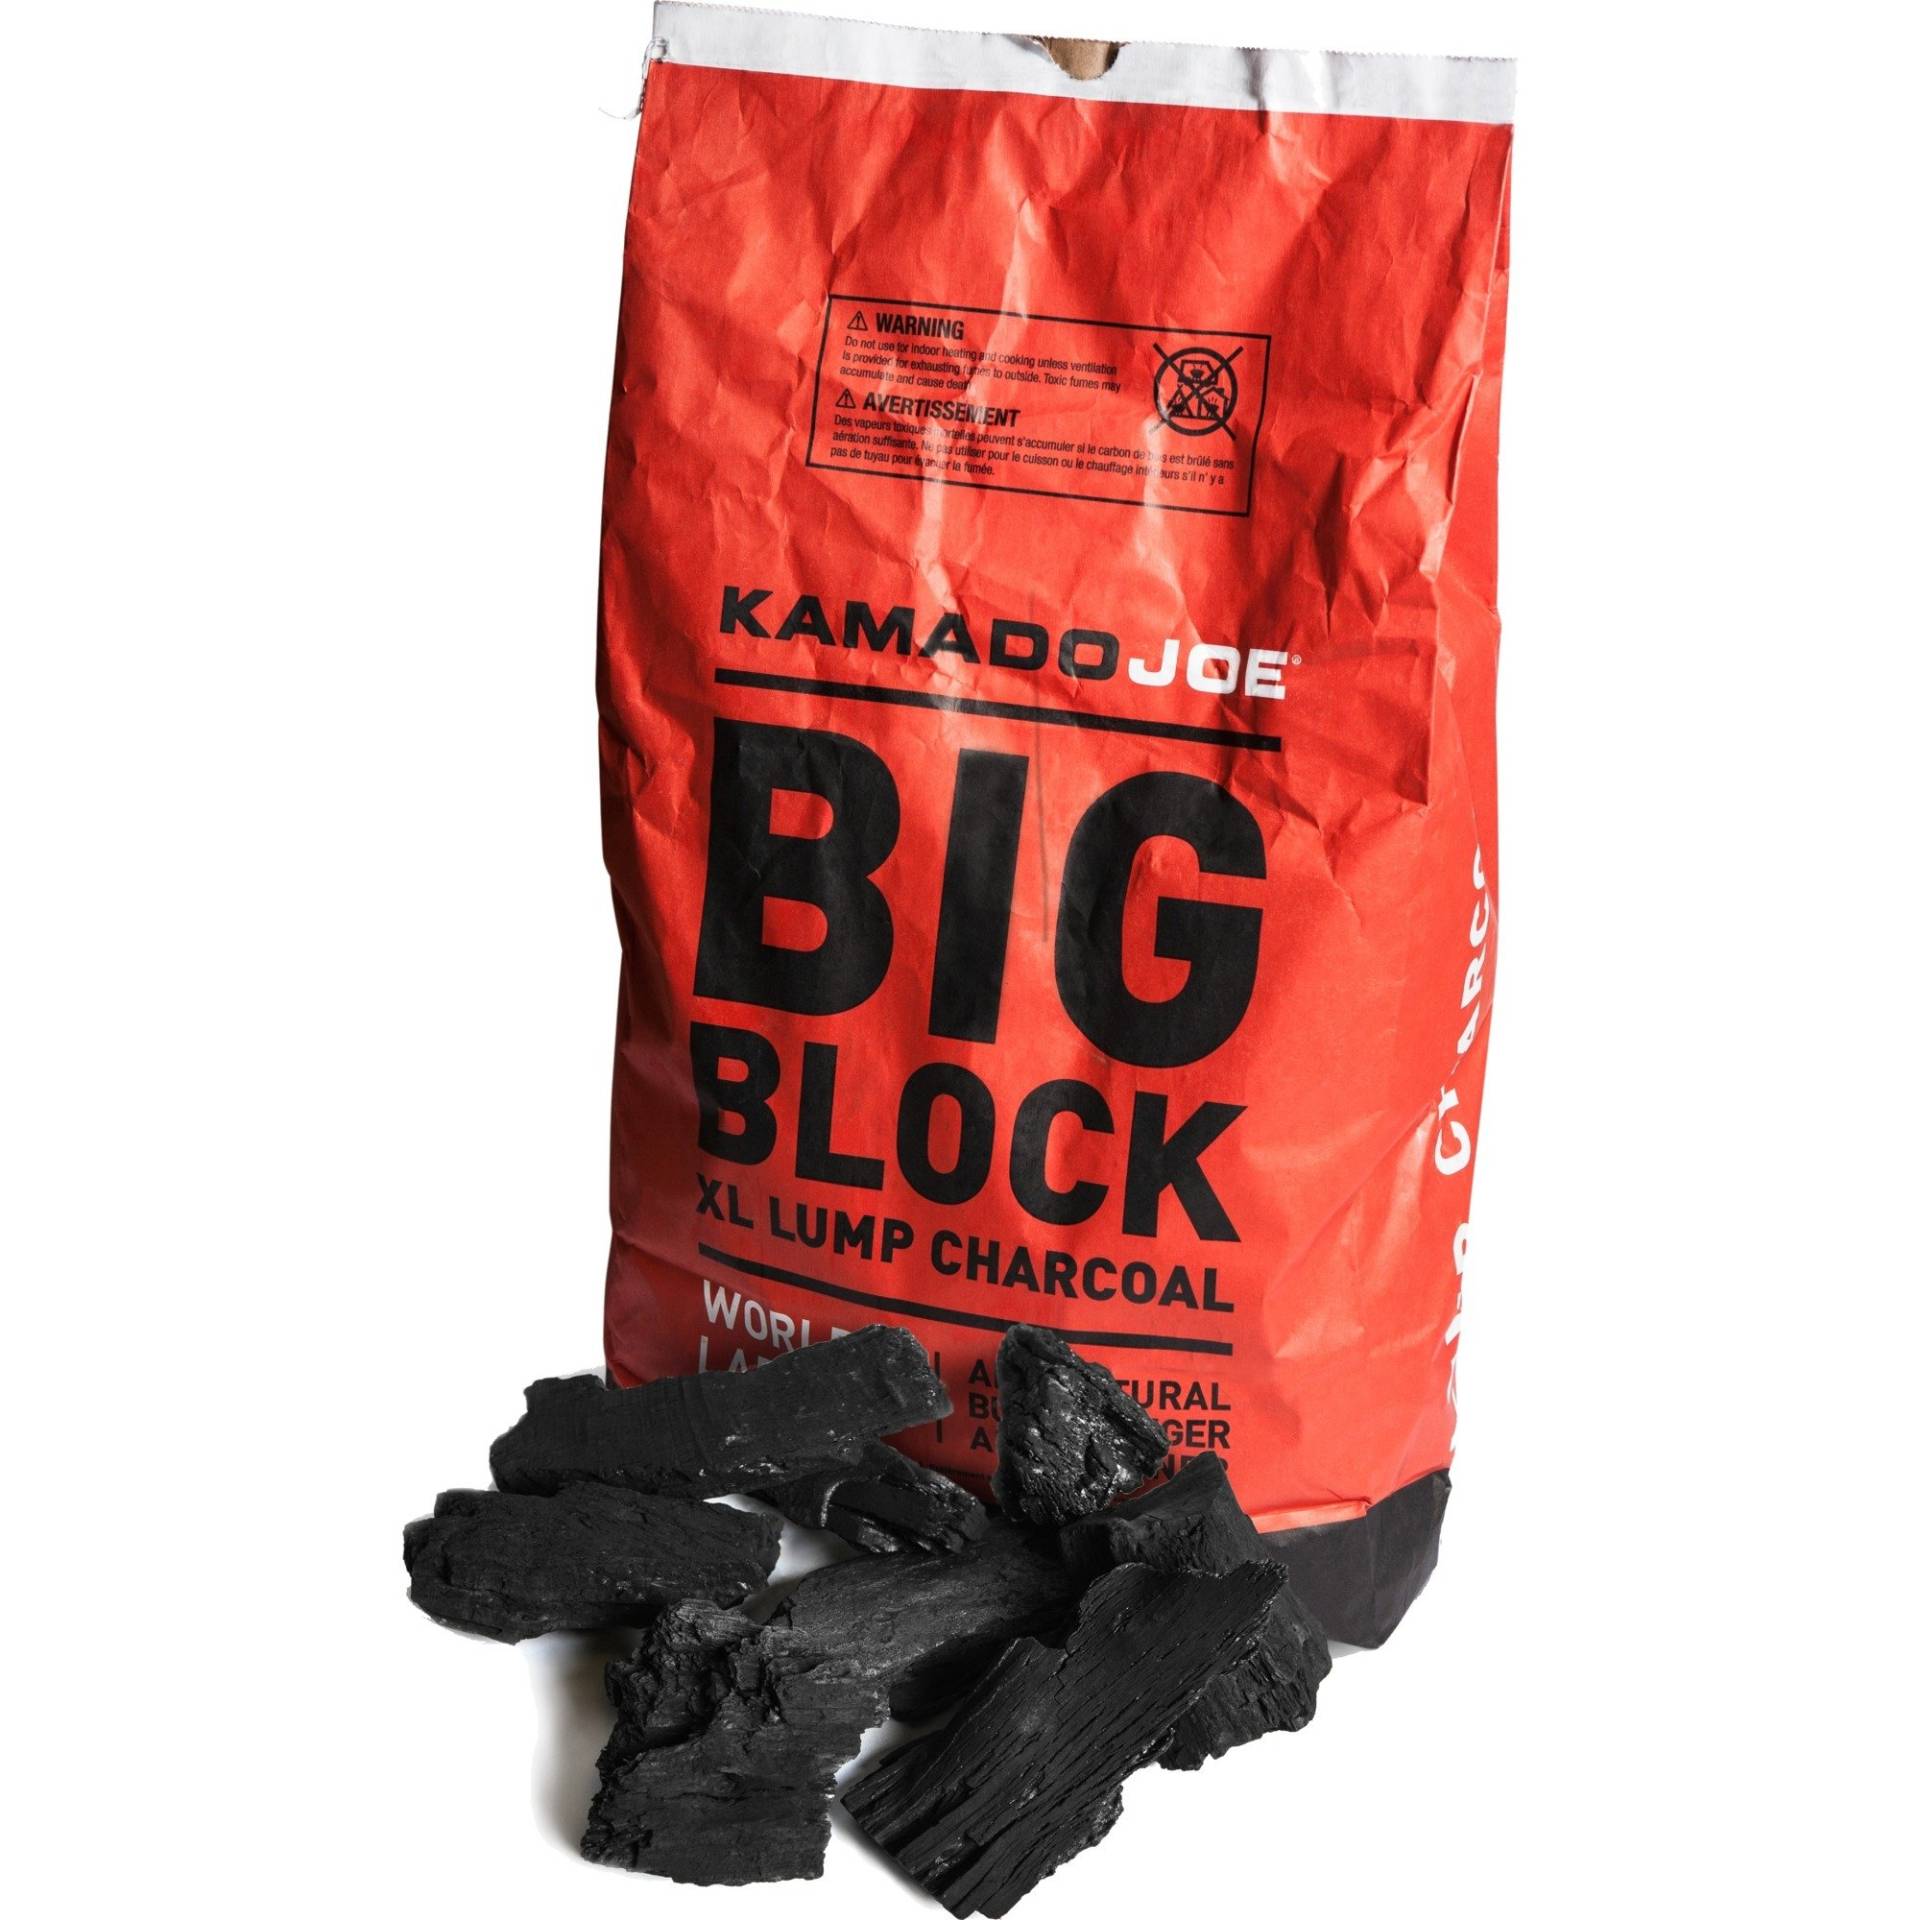 Grillkohle Big Block 9kg, Holzkohle von Kamado Joe